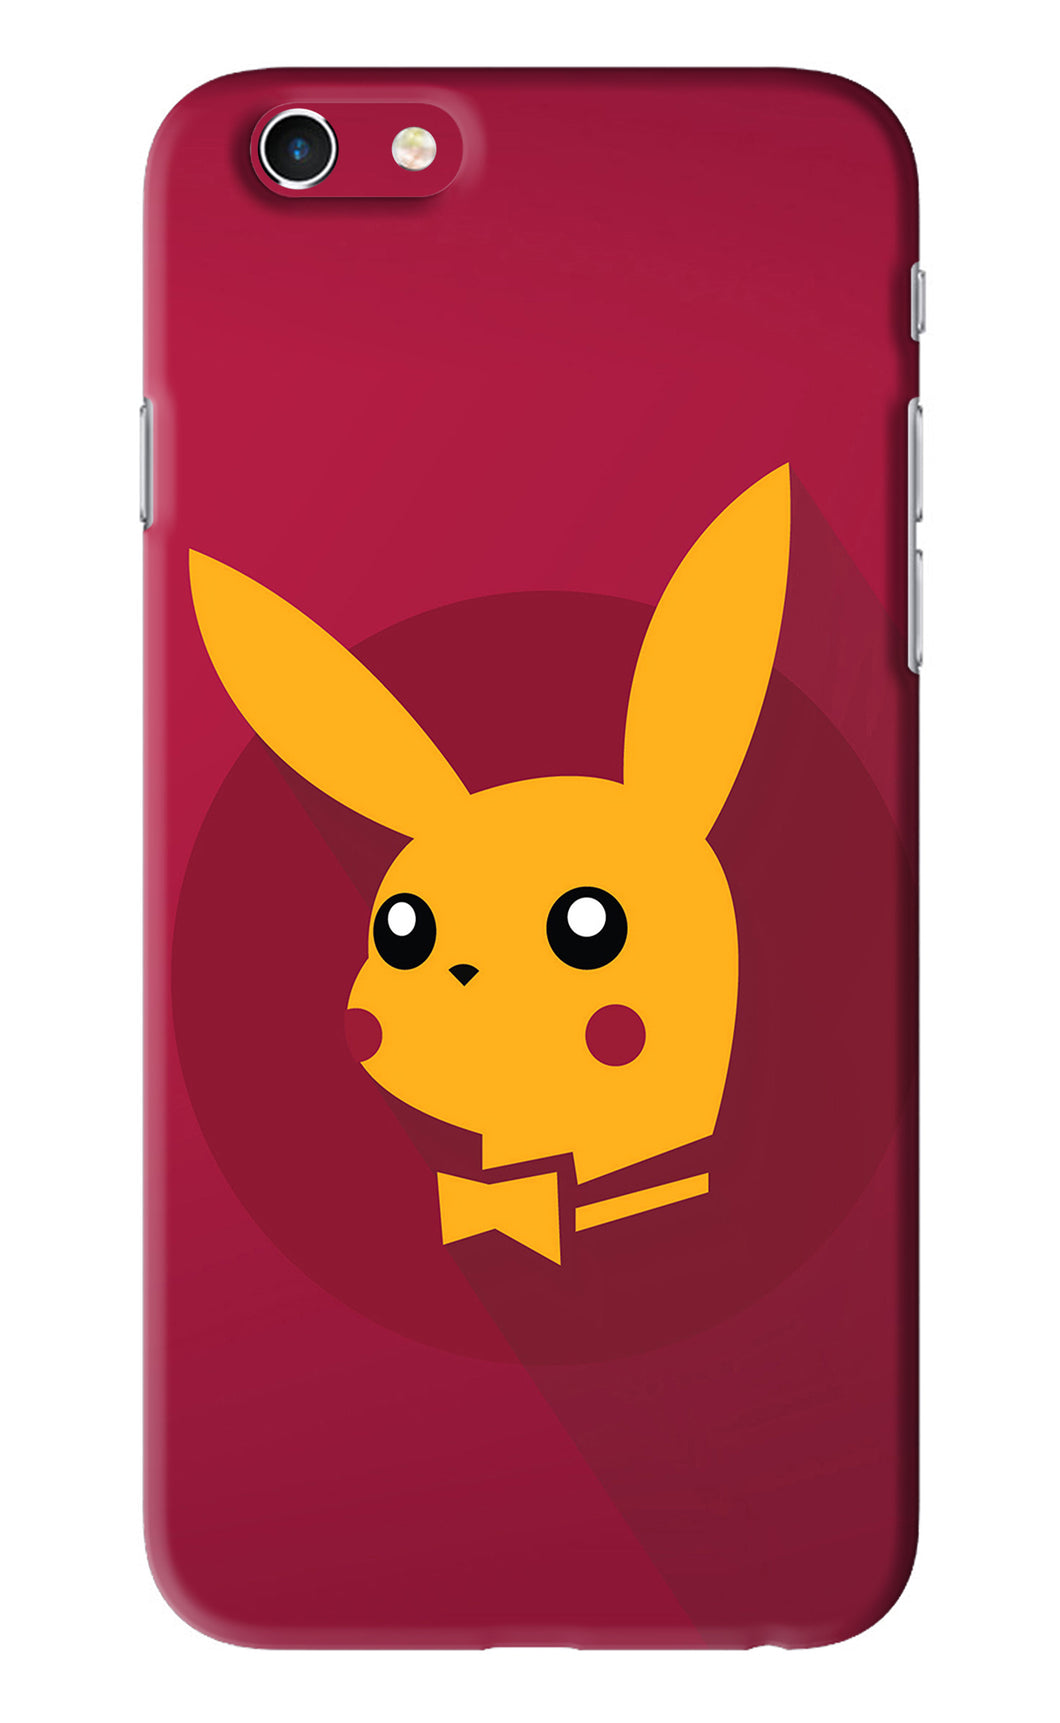 Pikachu iPhone 6 Back Skin Wrap